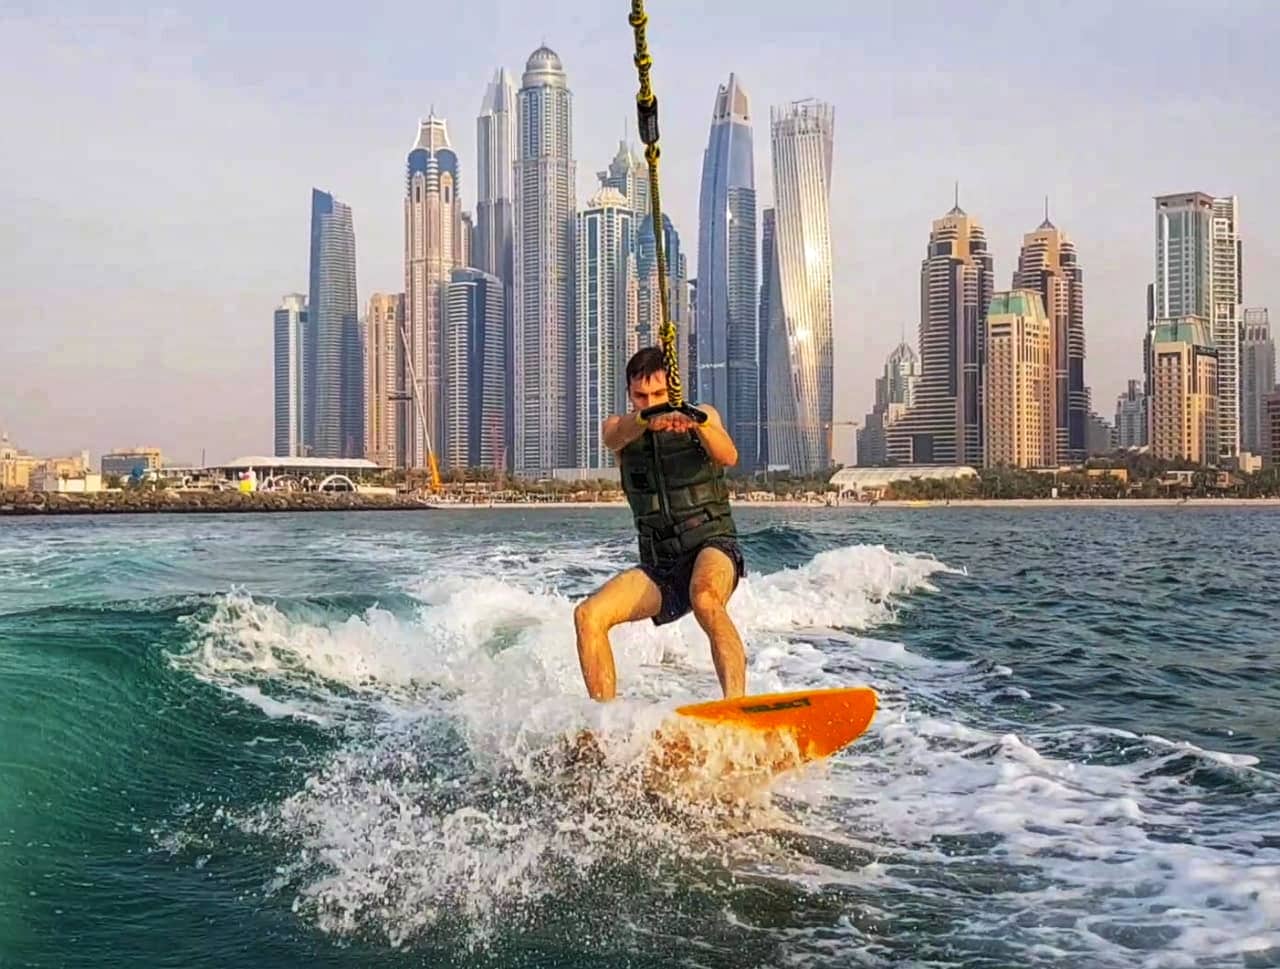 Nick on his way to work in Dubai